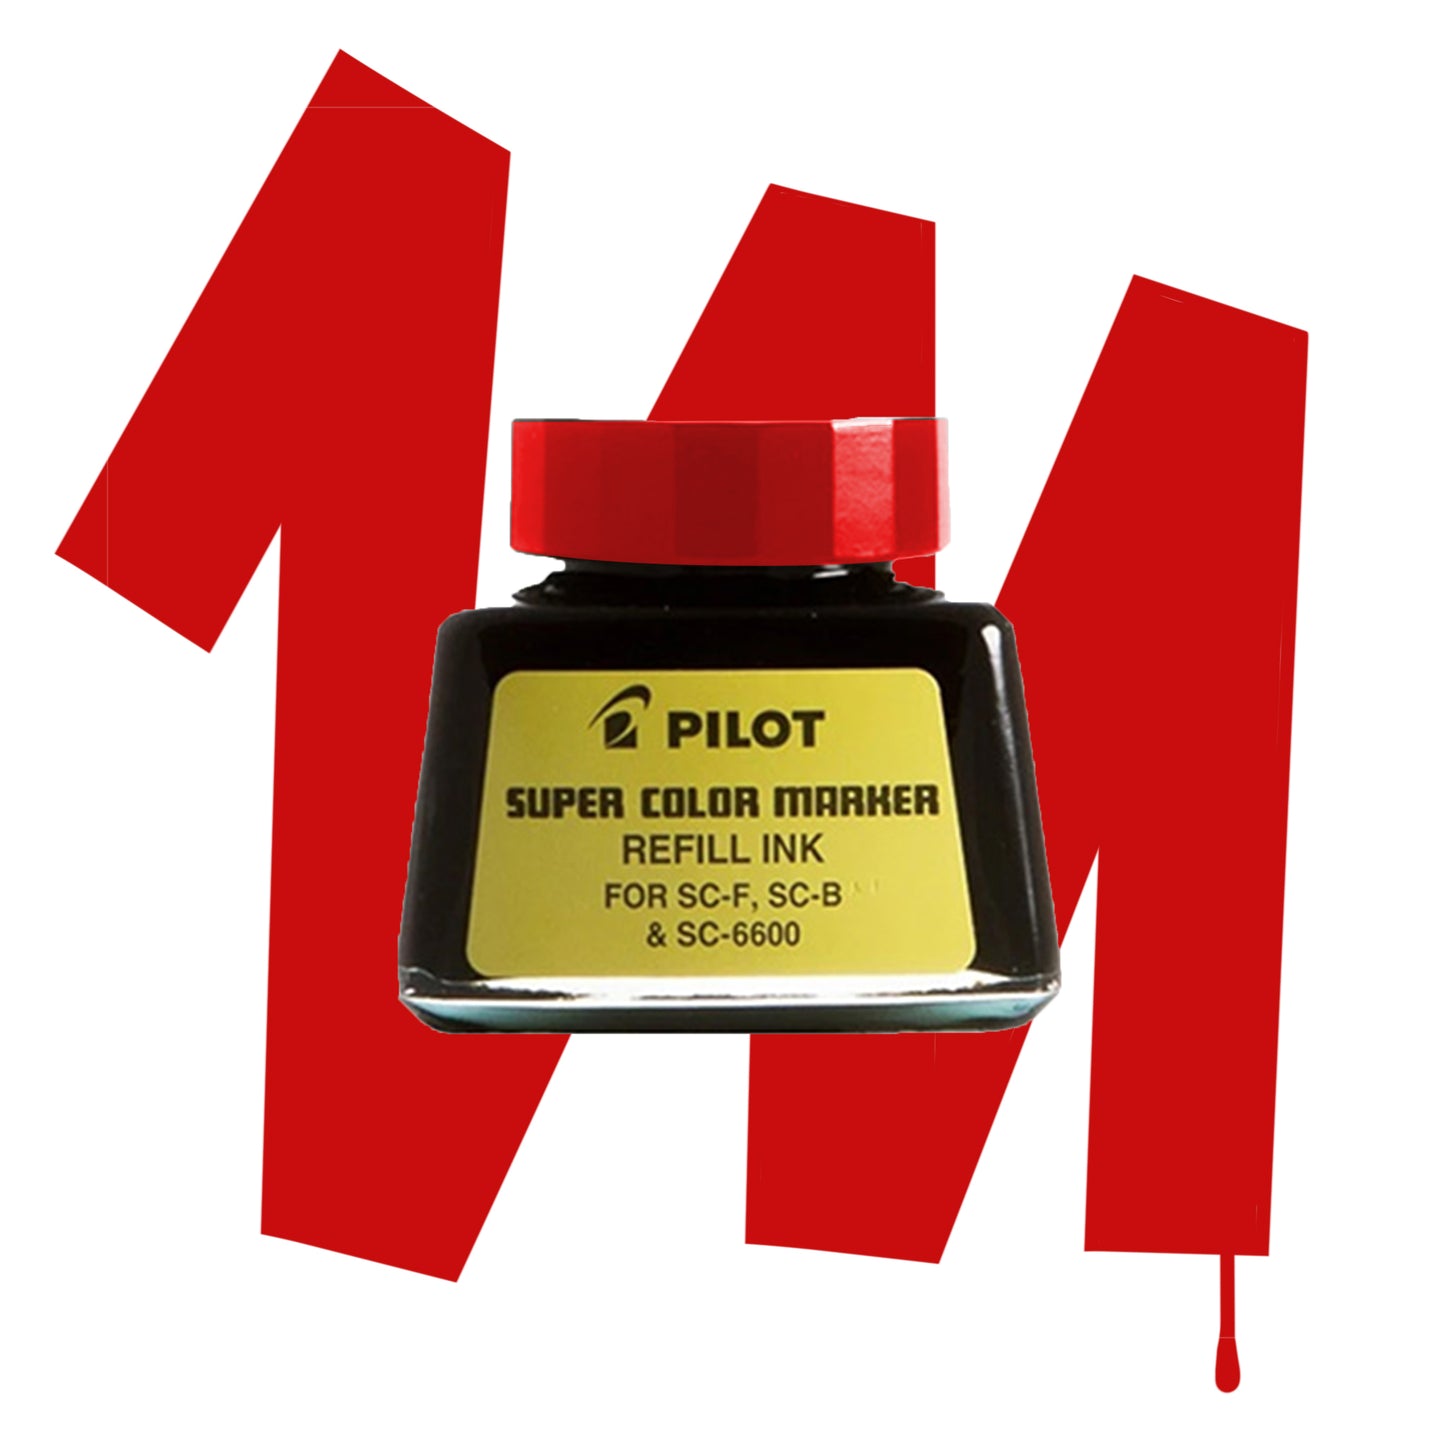 Pilot xylene based marker ink in red.